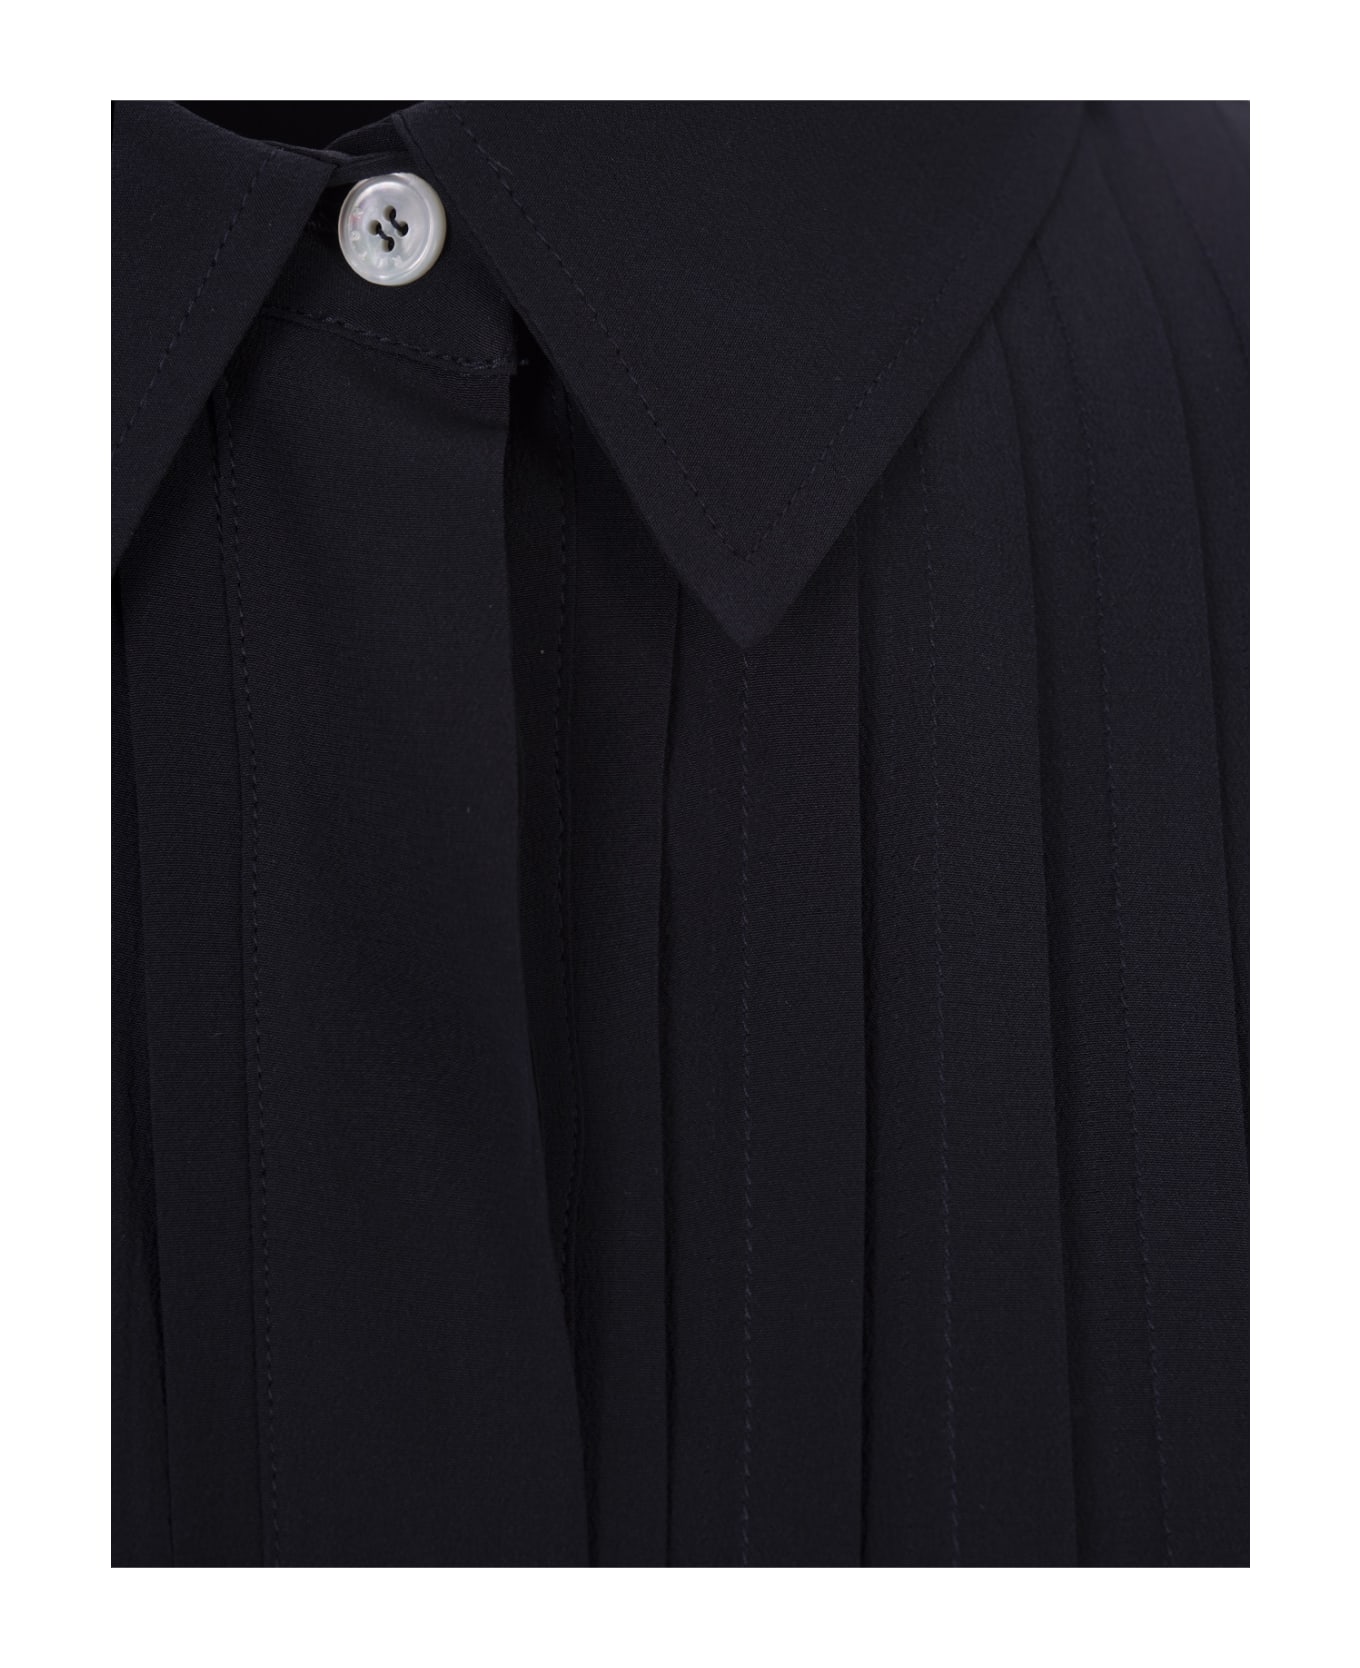 Kiton Black Silk Shirt Long Dress With Pleating - Black ワンピース＆ドレス